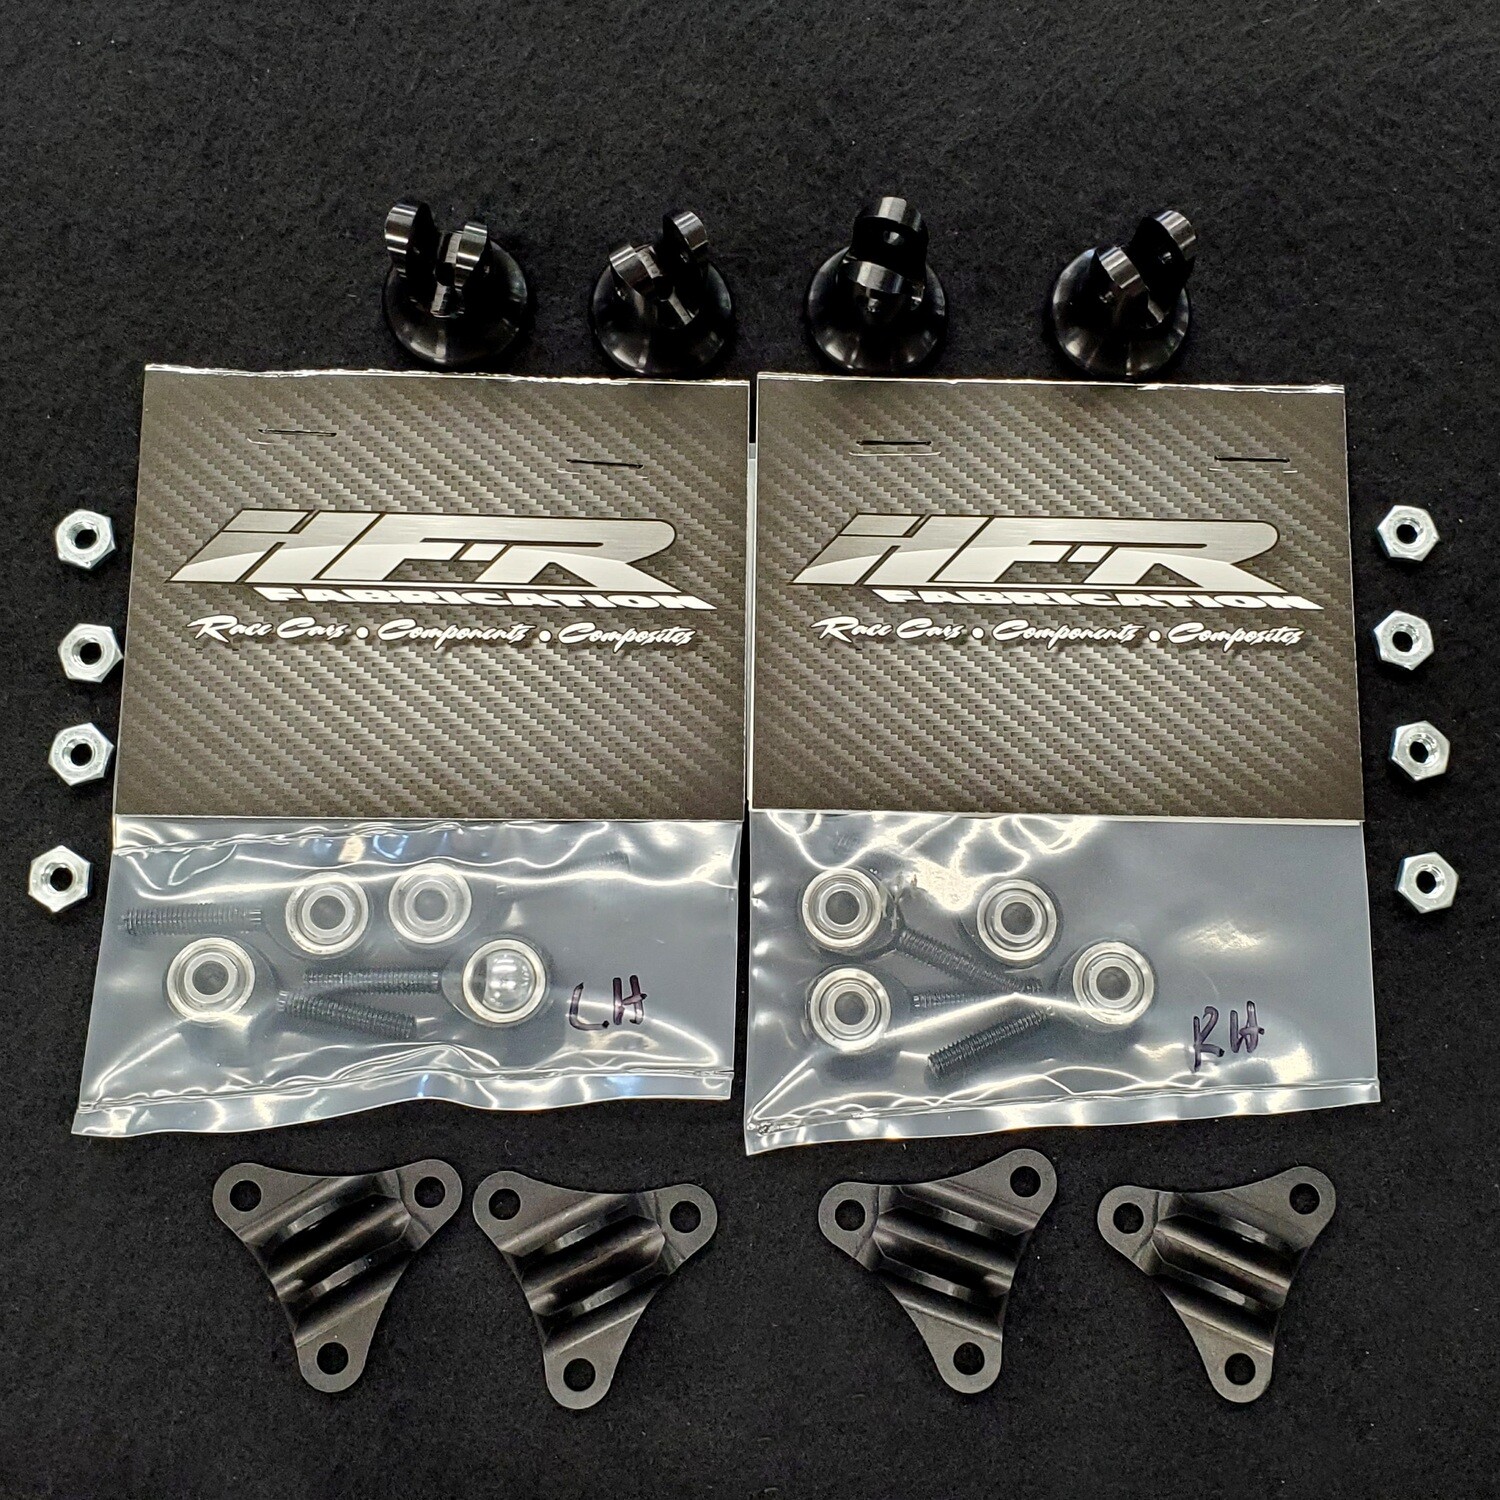 HFR Blackout Wing Hardware Kit V1